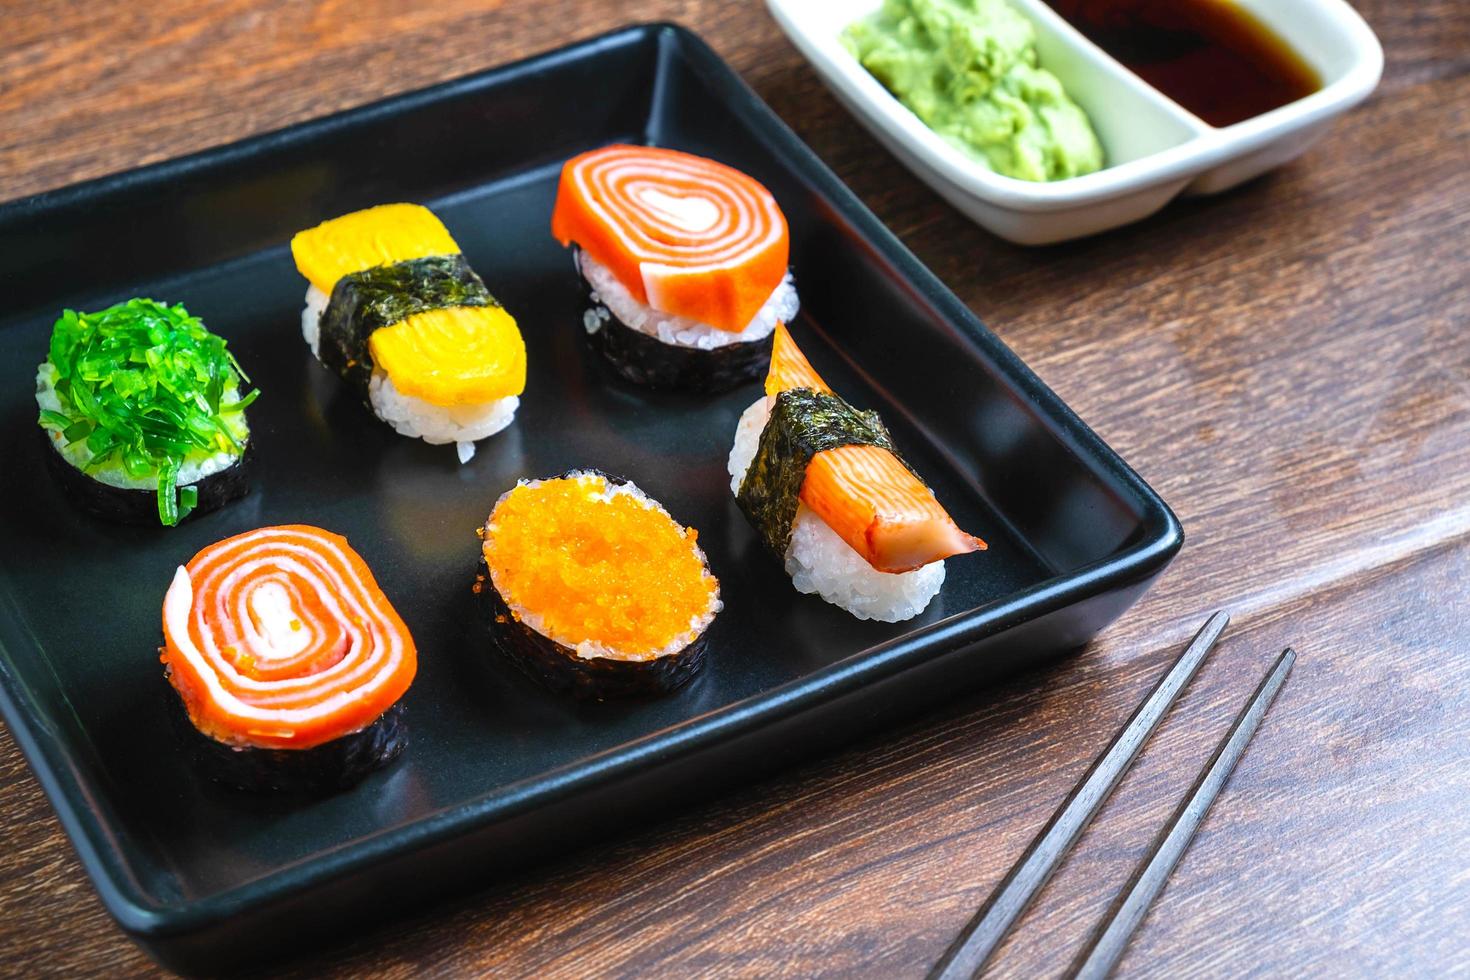 bord met sushi foto